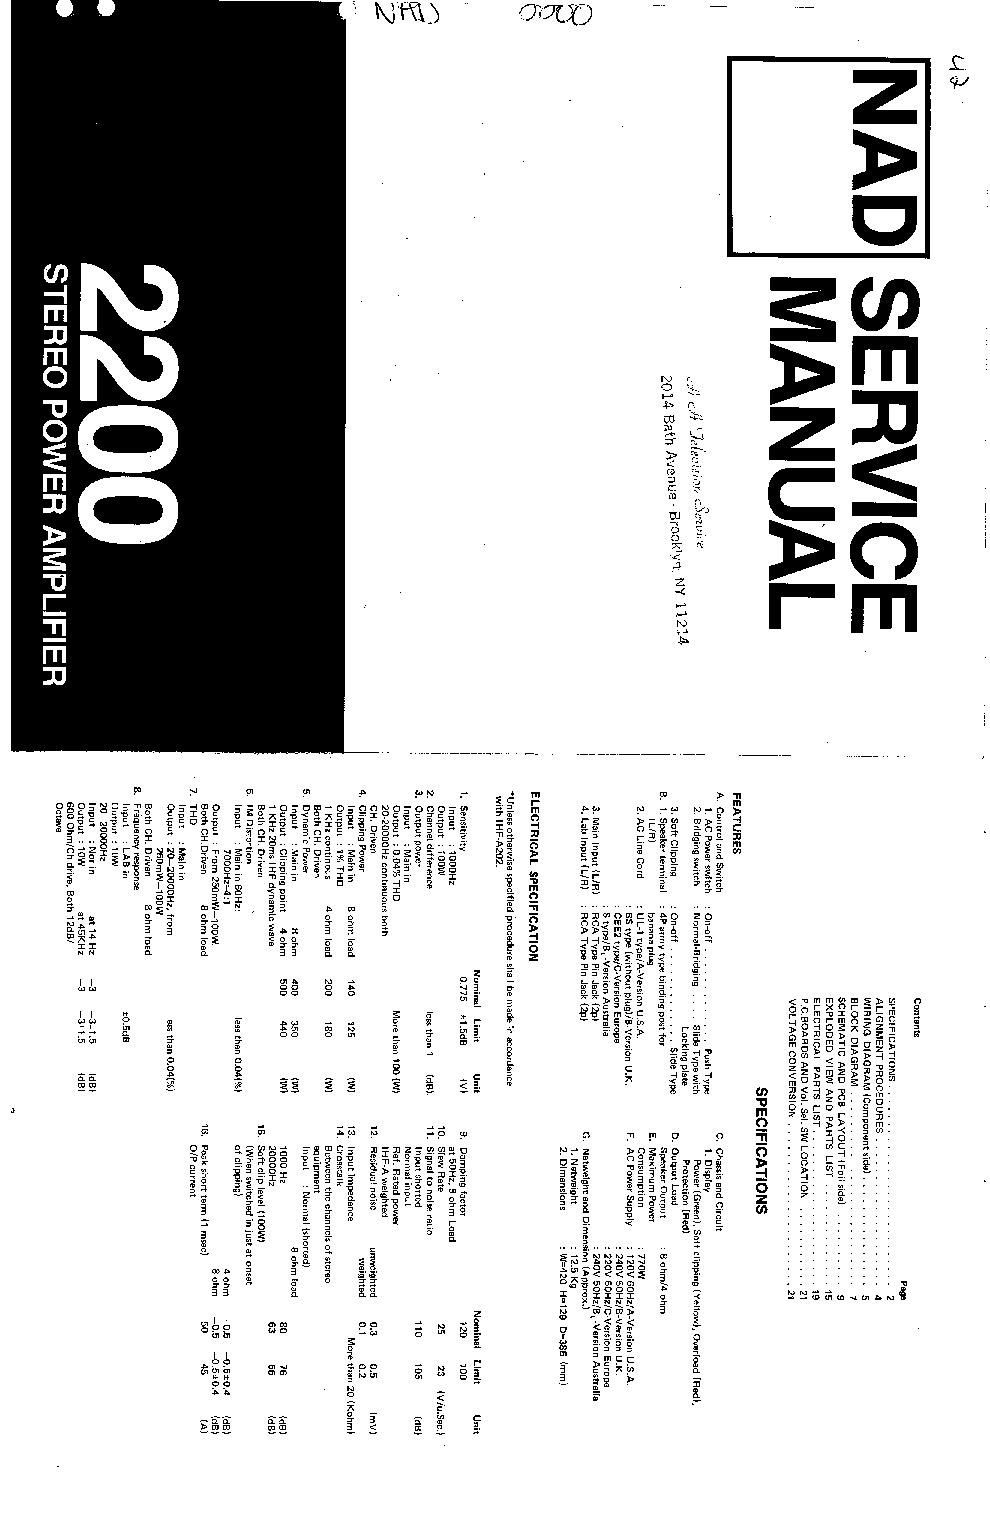 NAD 2200 100W STEREO PA 1985 SM service manual (1st page)